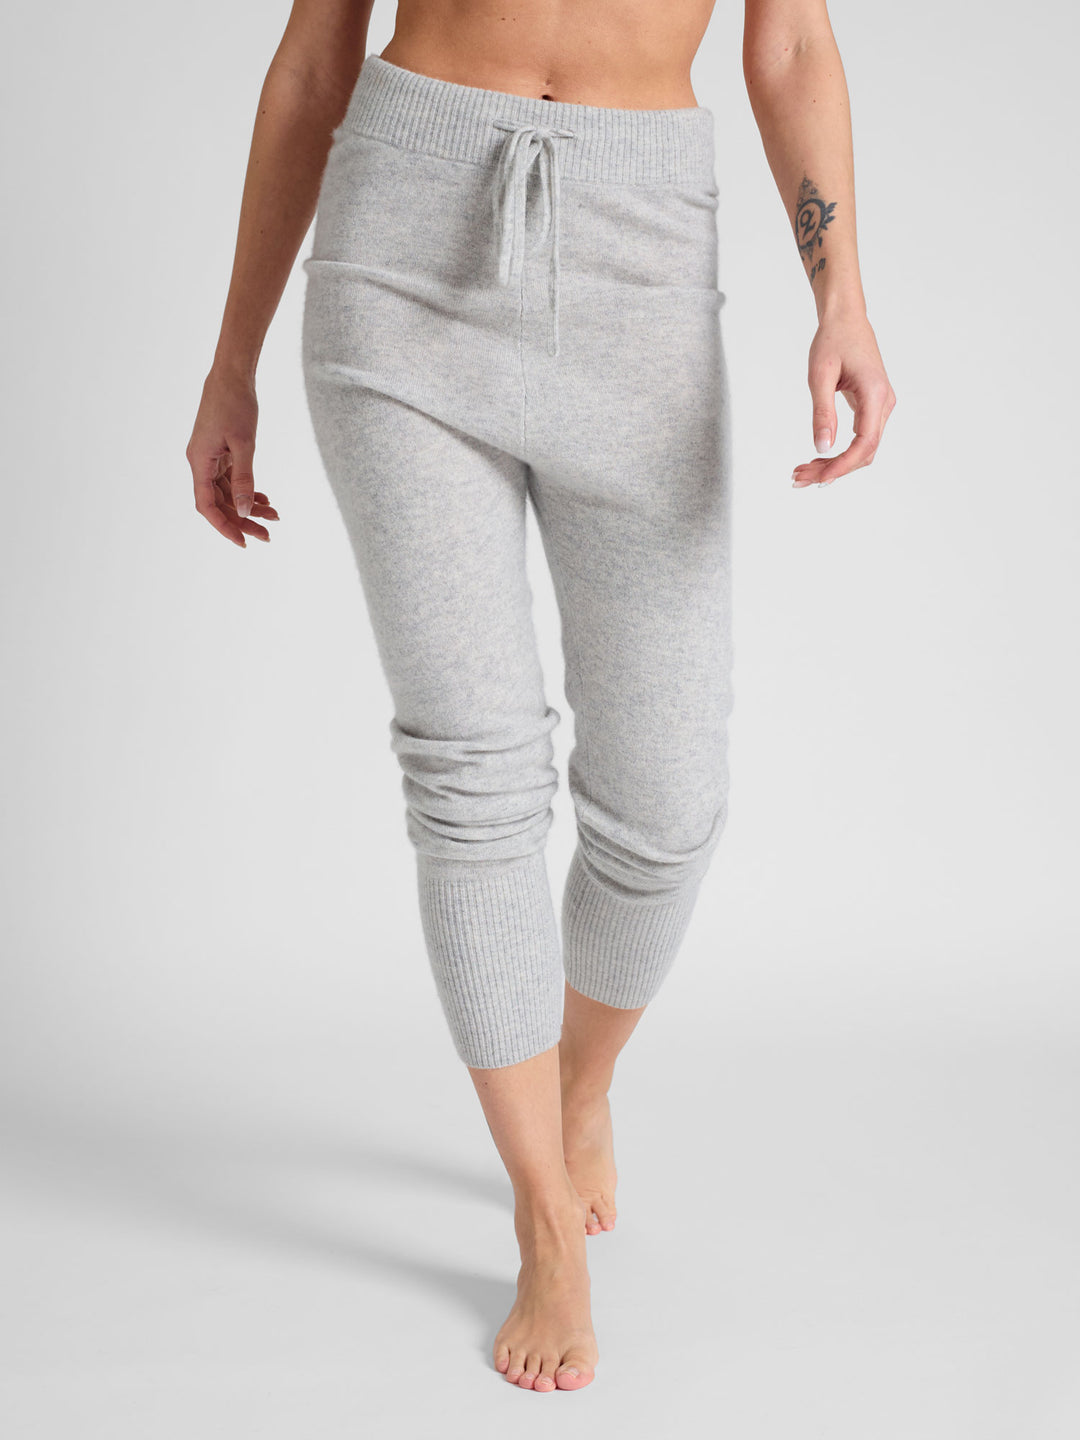 Cashmere pants "Chill Pants" in 100% pure cashmere. color: light grey. Scandinavian design by Kashmina